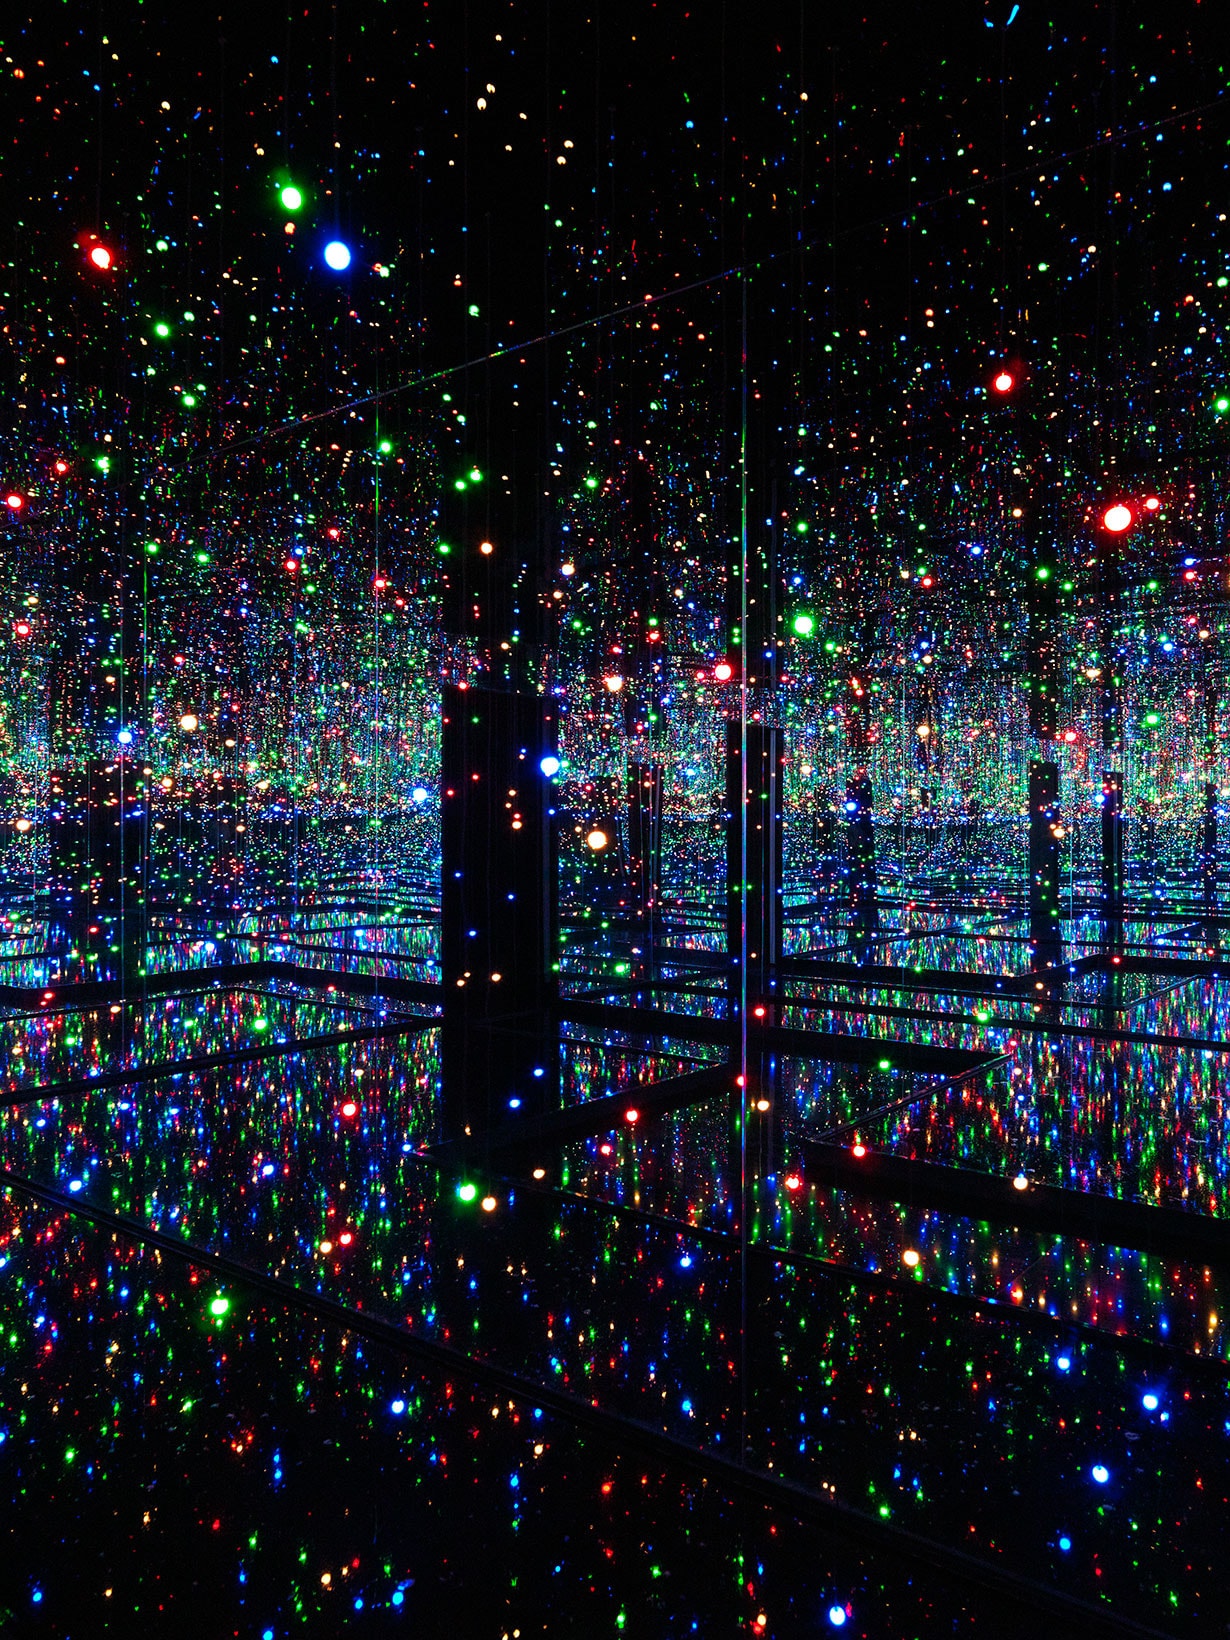 yayoi kusama infinity mirrored rooms tate modern exhibiton inside look space lights